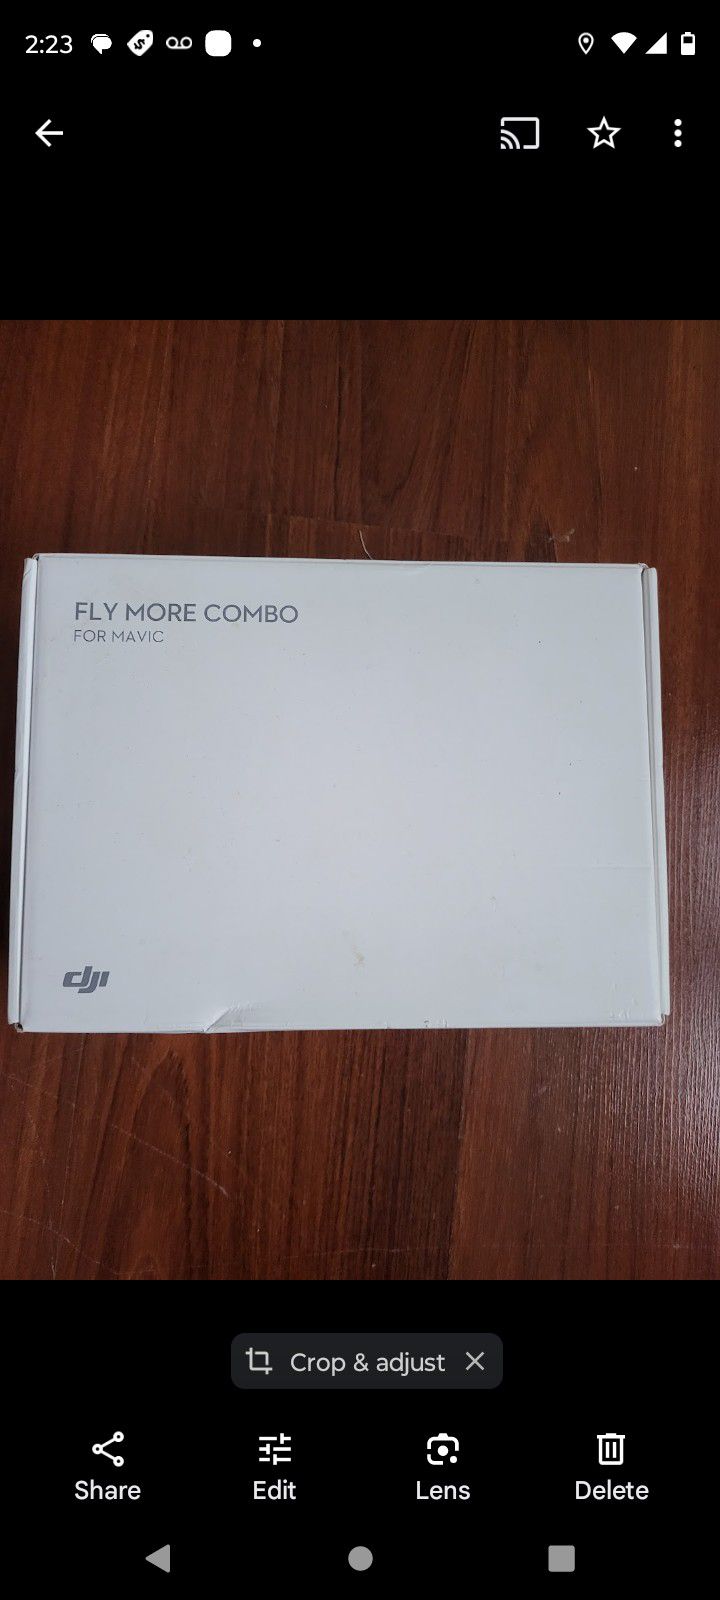 DJI Fly More Combo